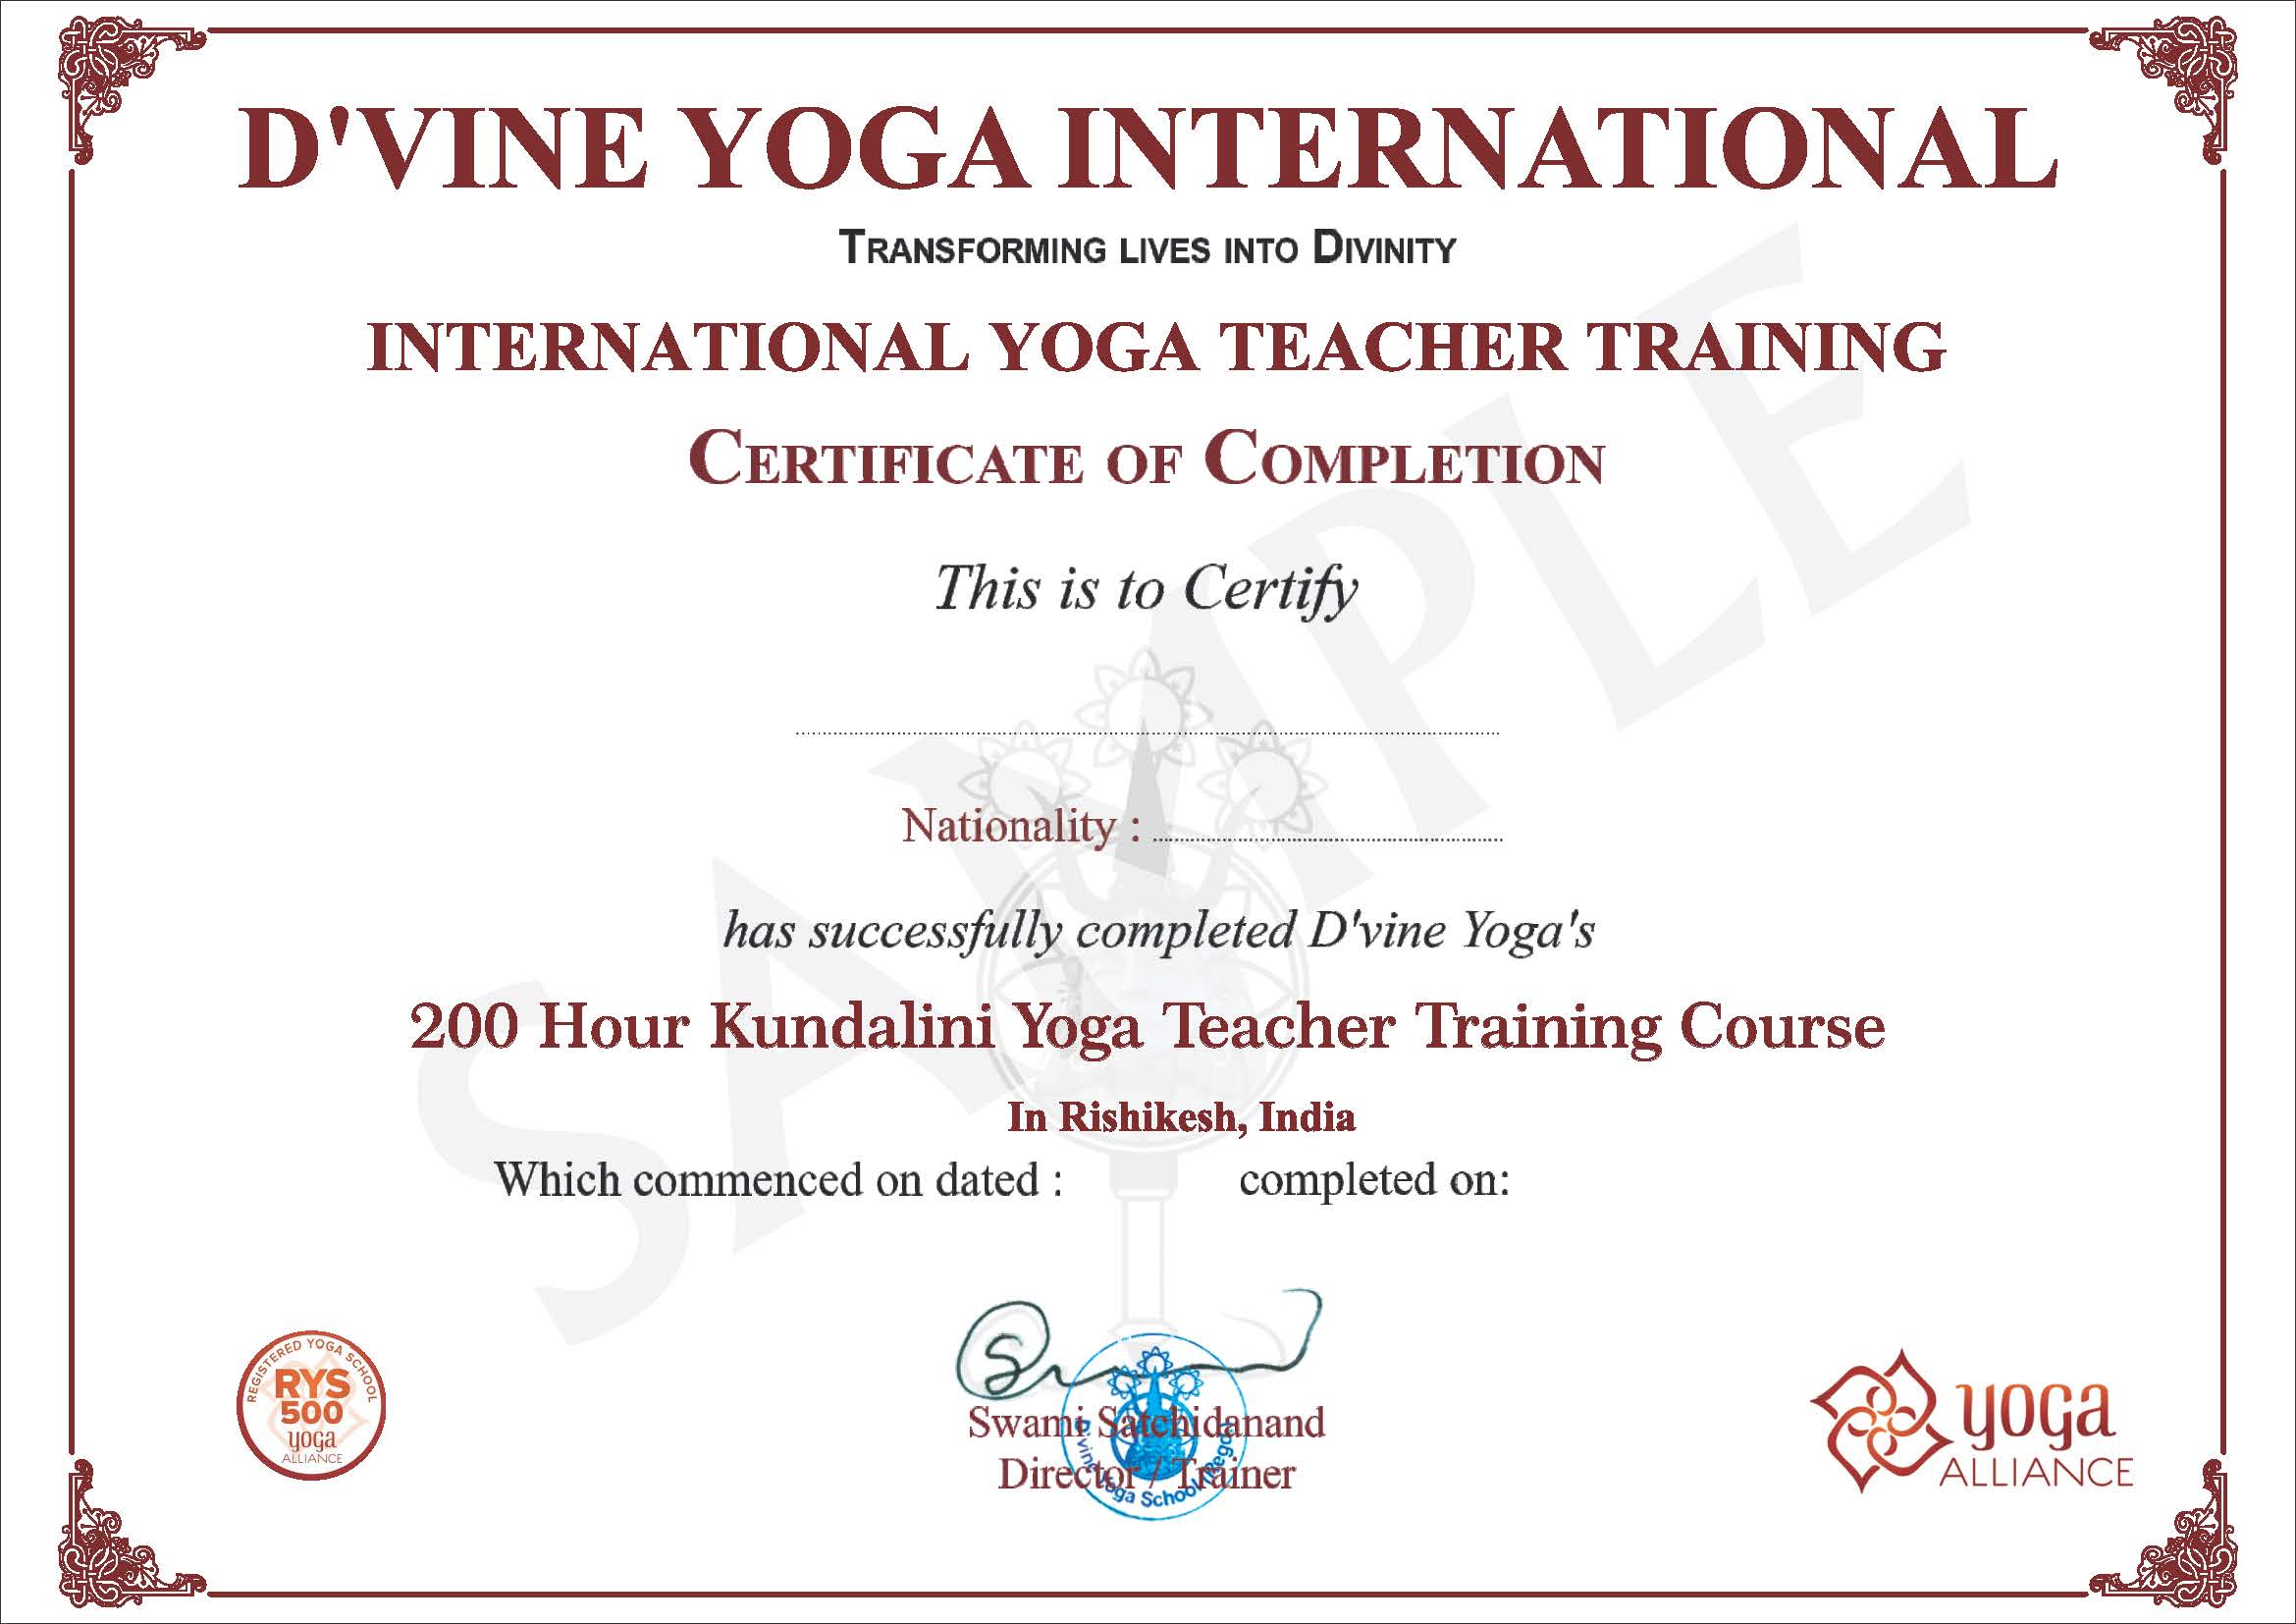 200 Hour Kundalini Yoga Teacher Training Course in Rishikesh